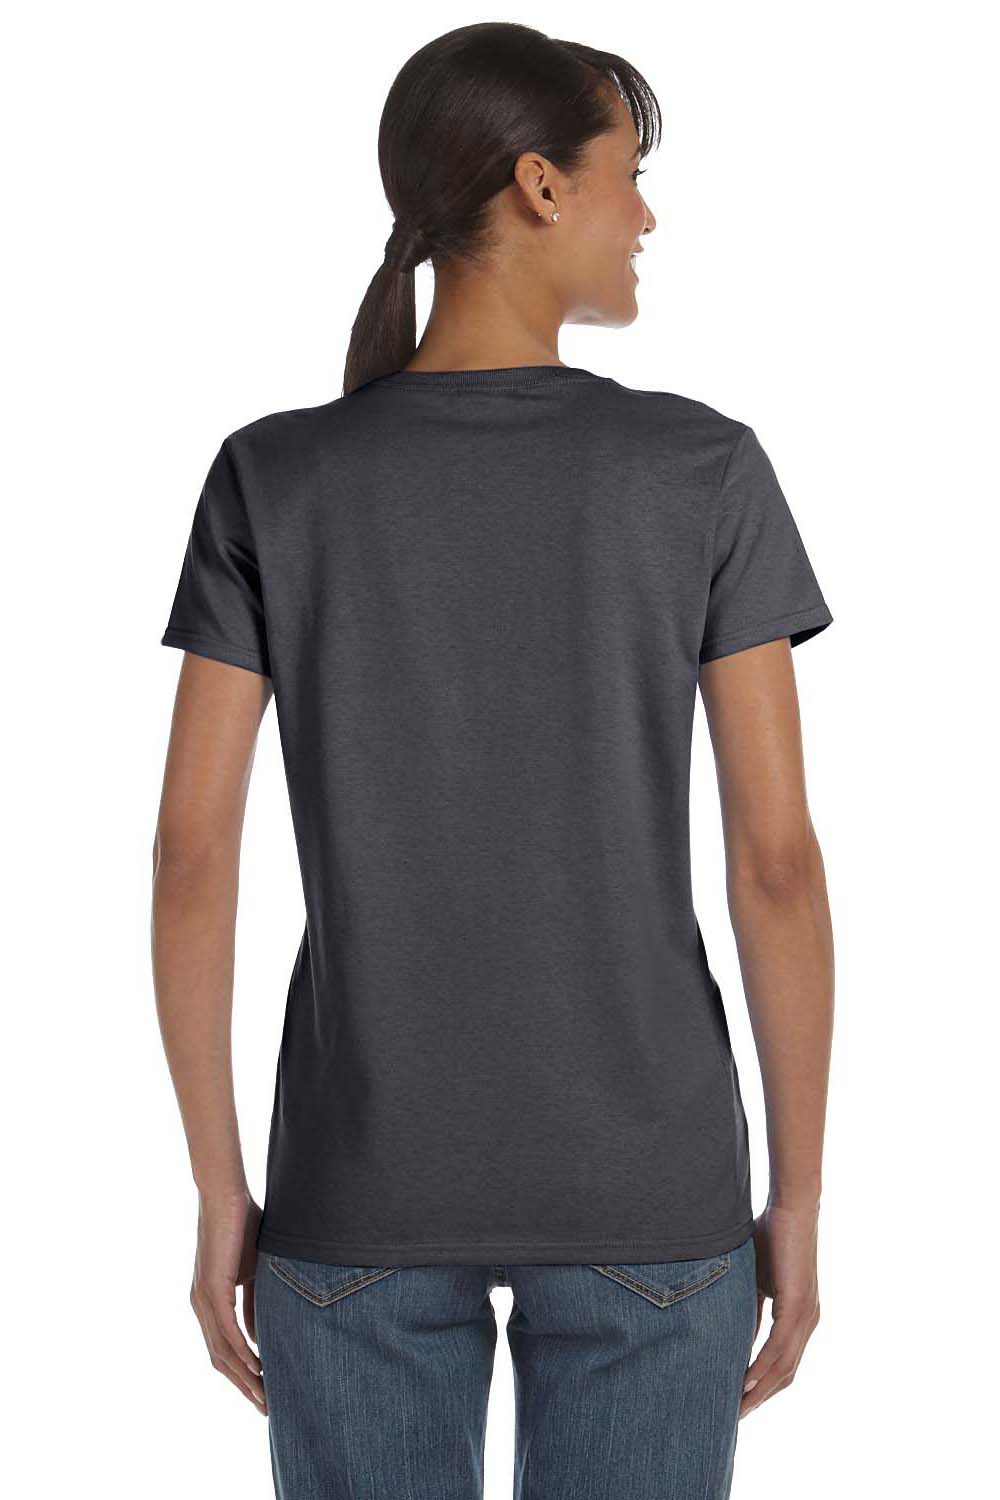 Gildan G500L Womens Short Sleeve Crewneck T-Shirt Charcoal Grey Back